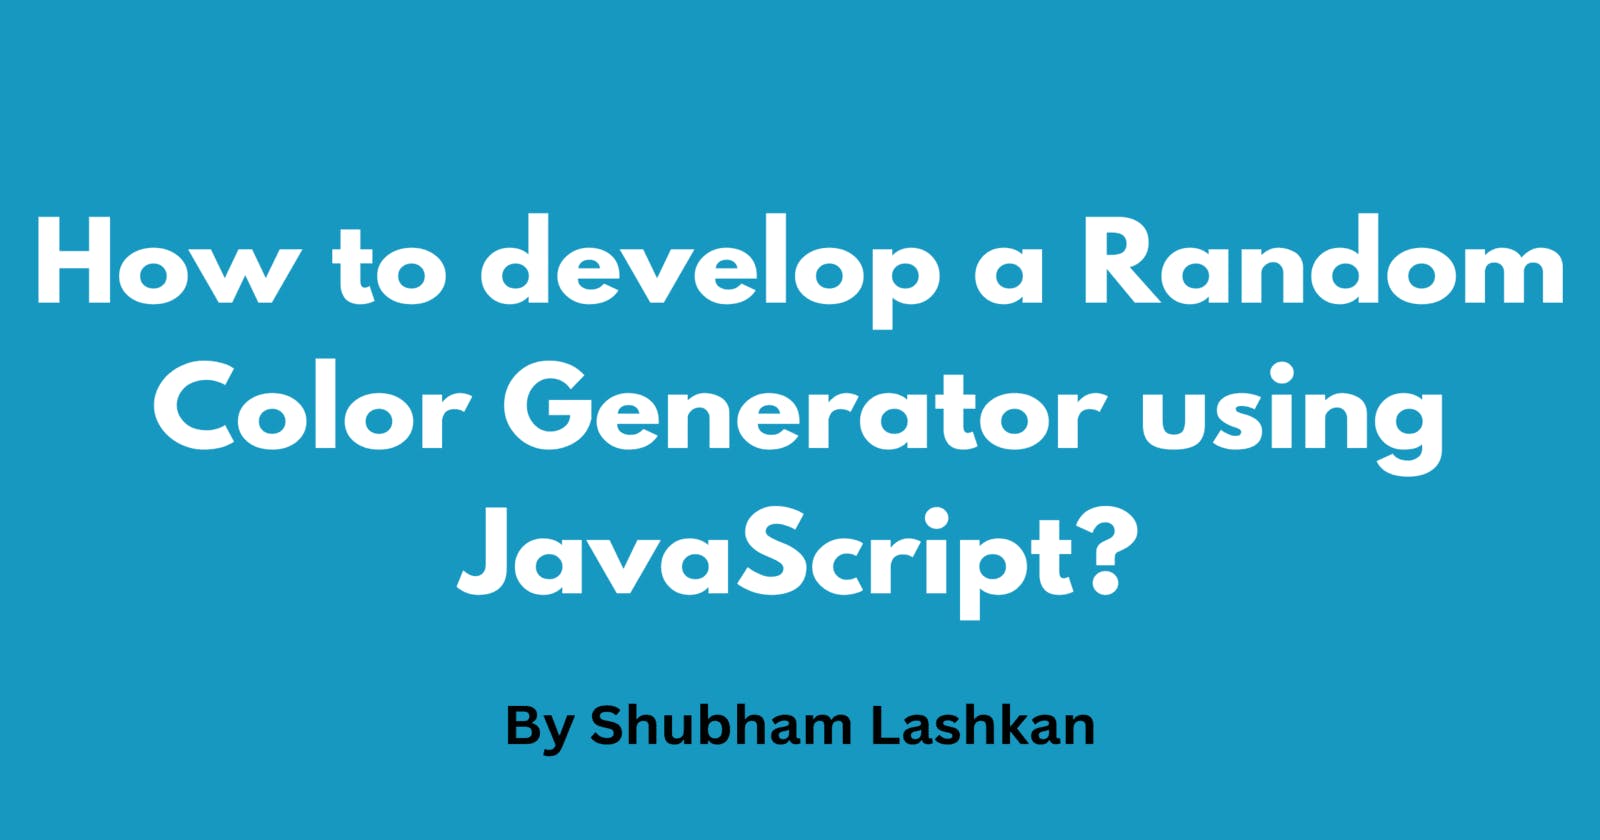 How to develop a Random Color Generator using JavaScript?